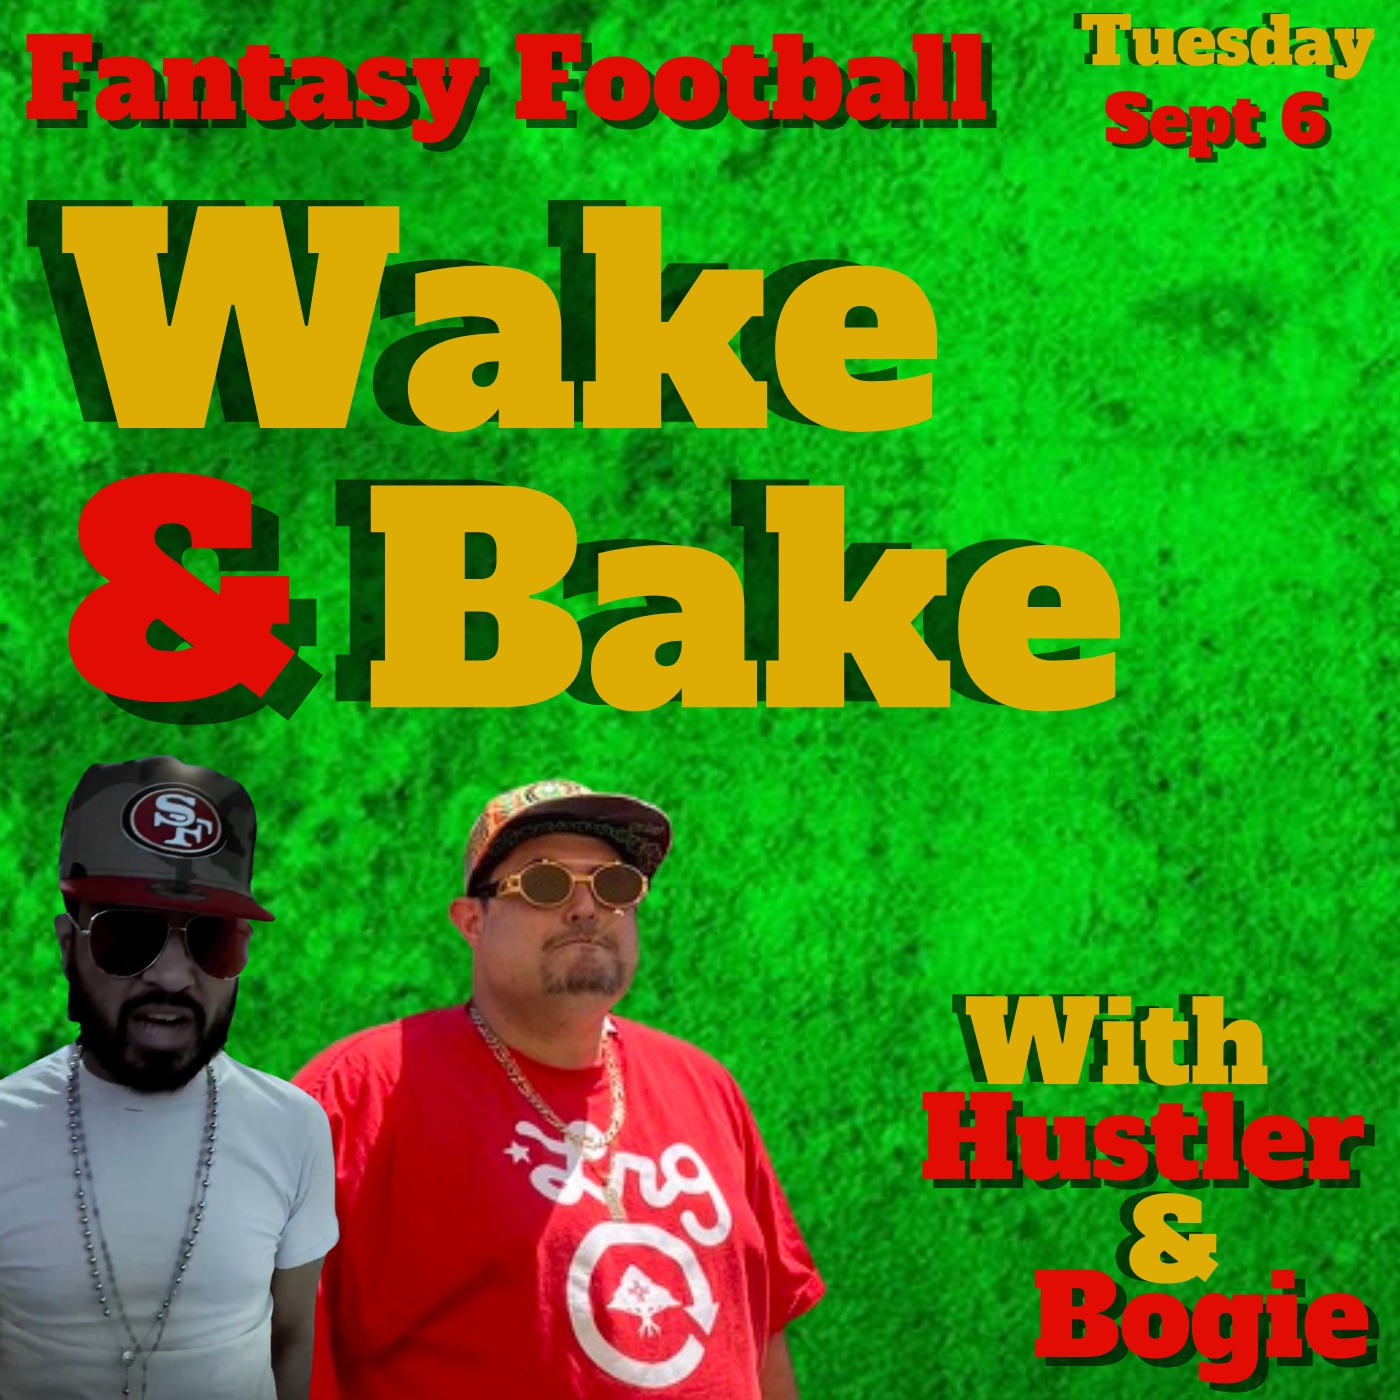 Fantasy Football Wake & Bake | Tuesday September 13th 2022 Image